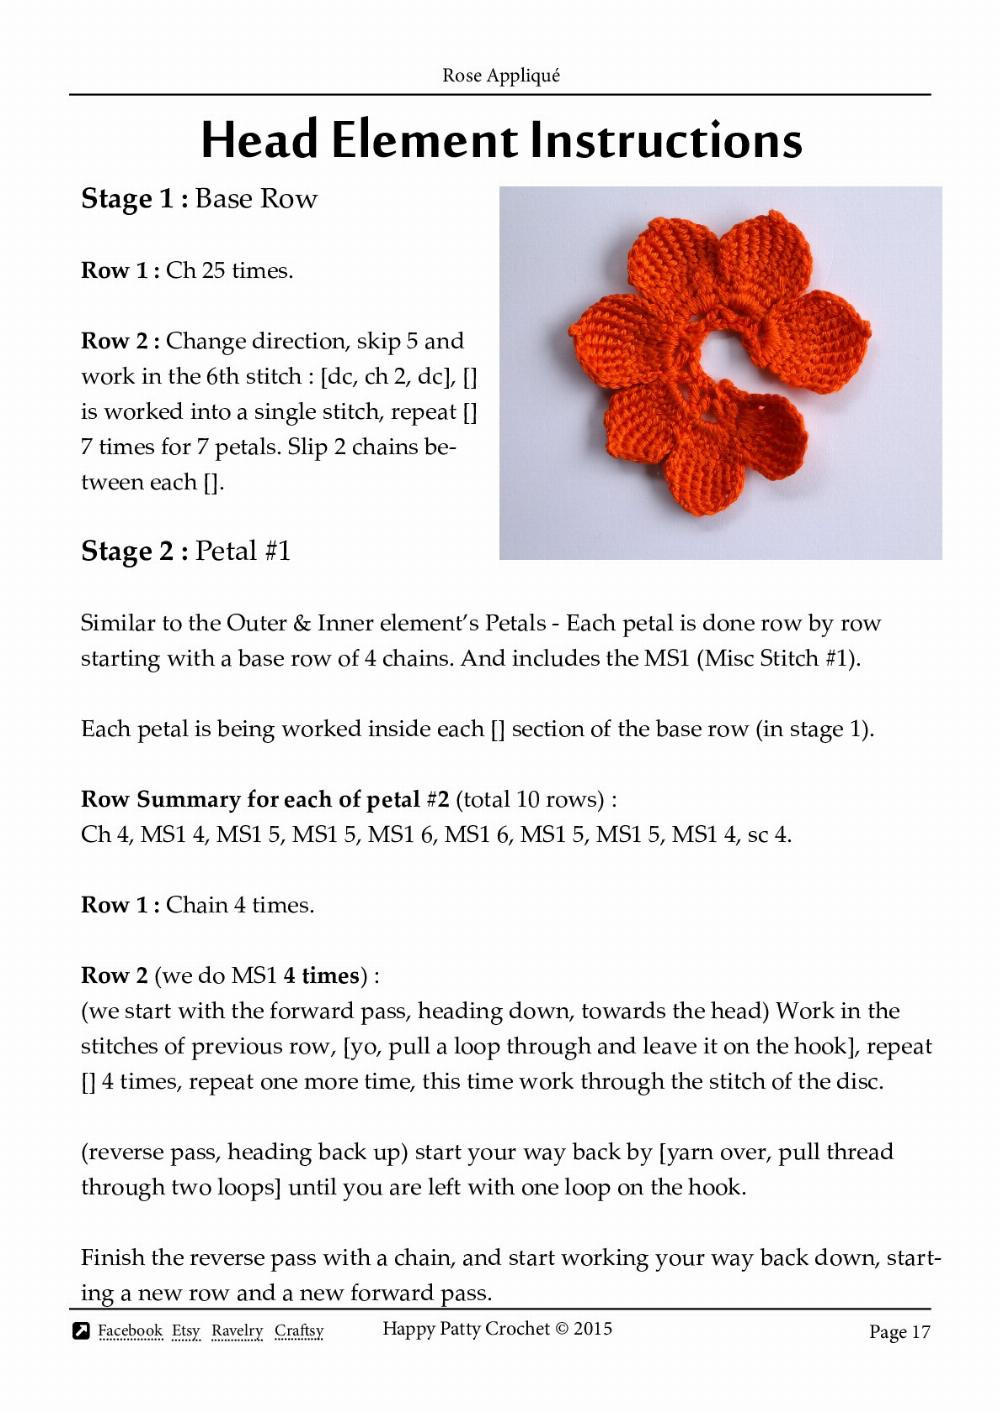 Rose Appliqué crochet pattern